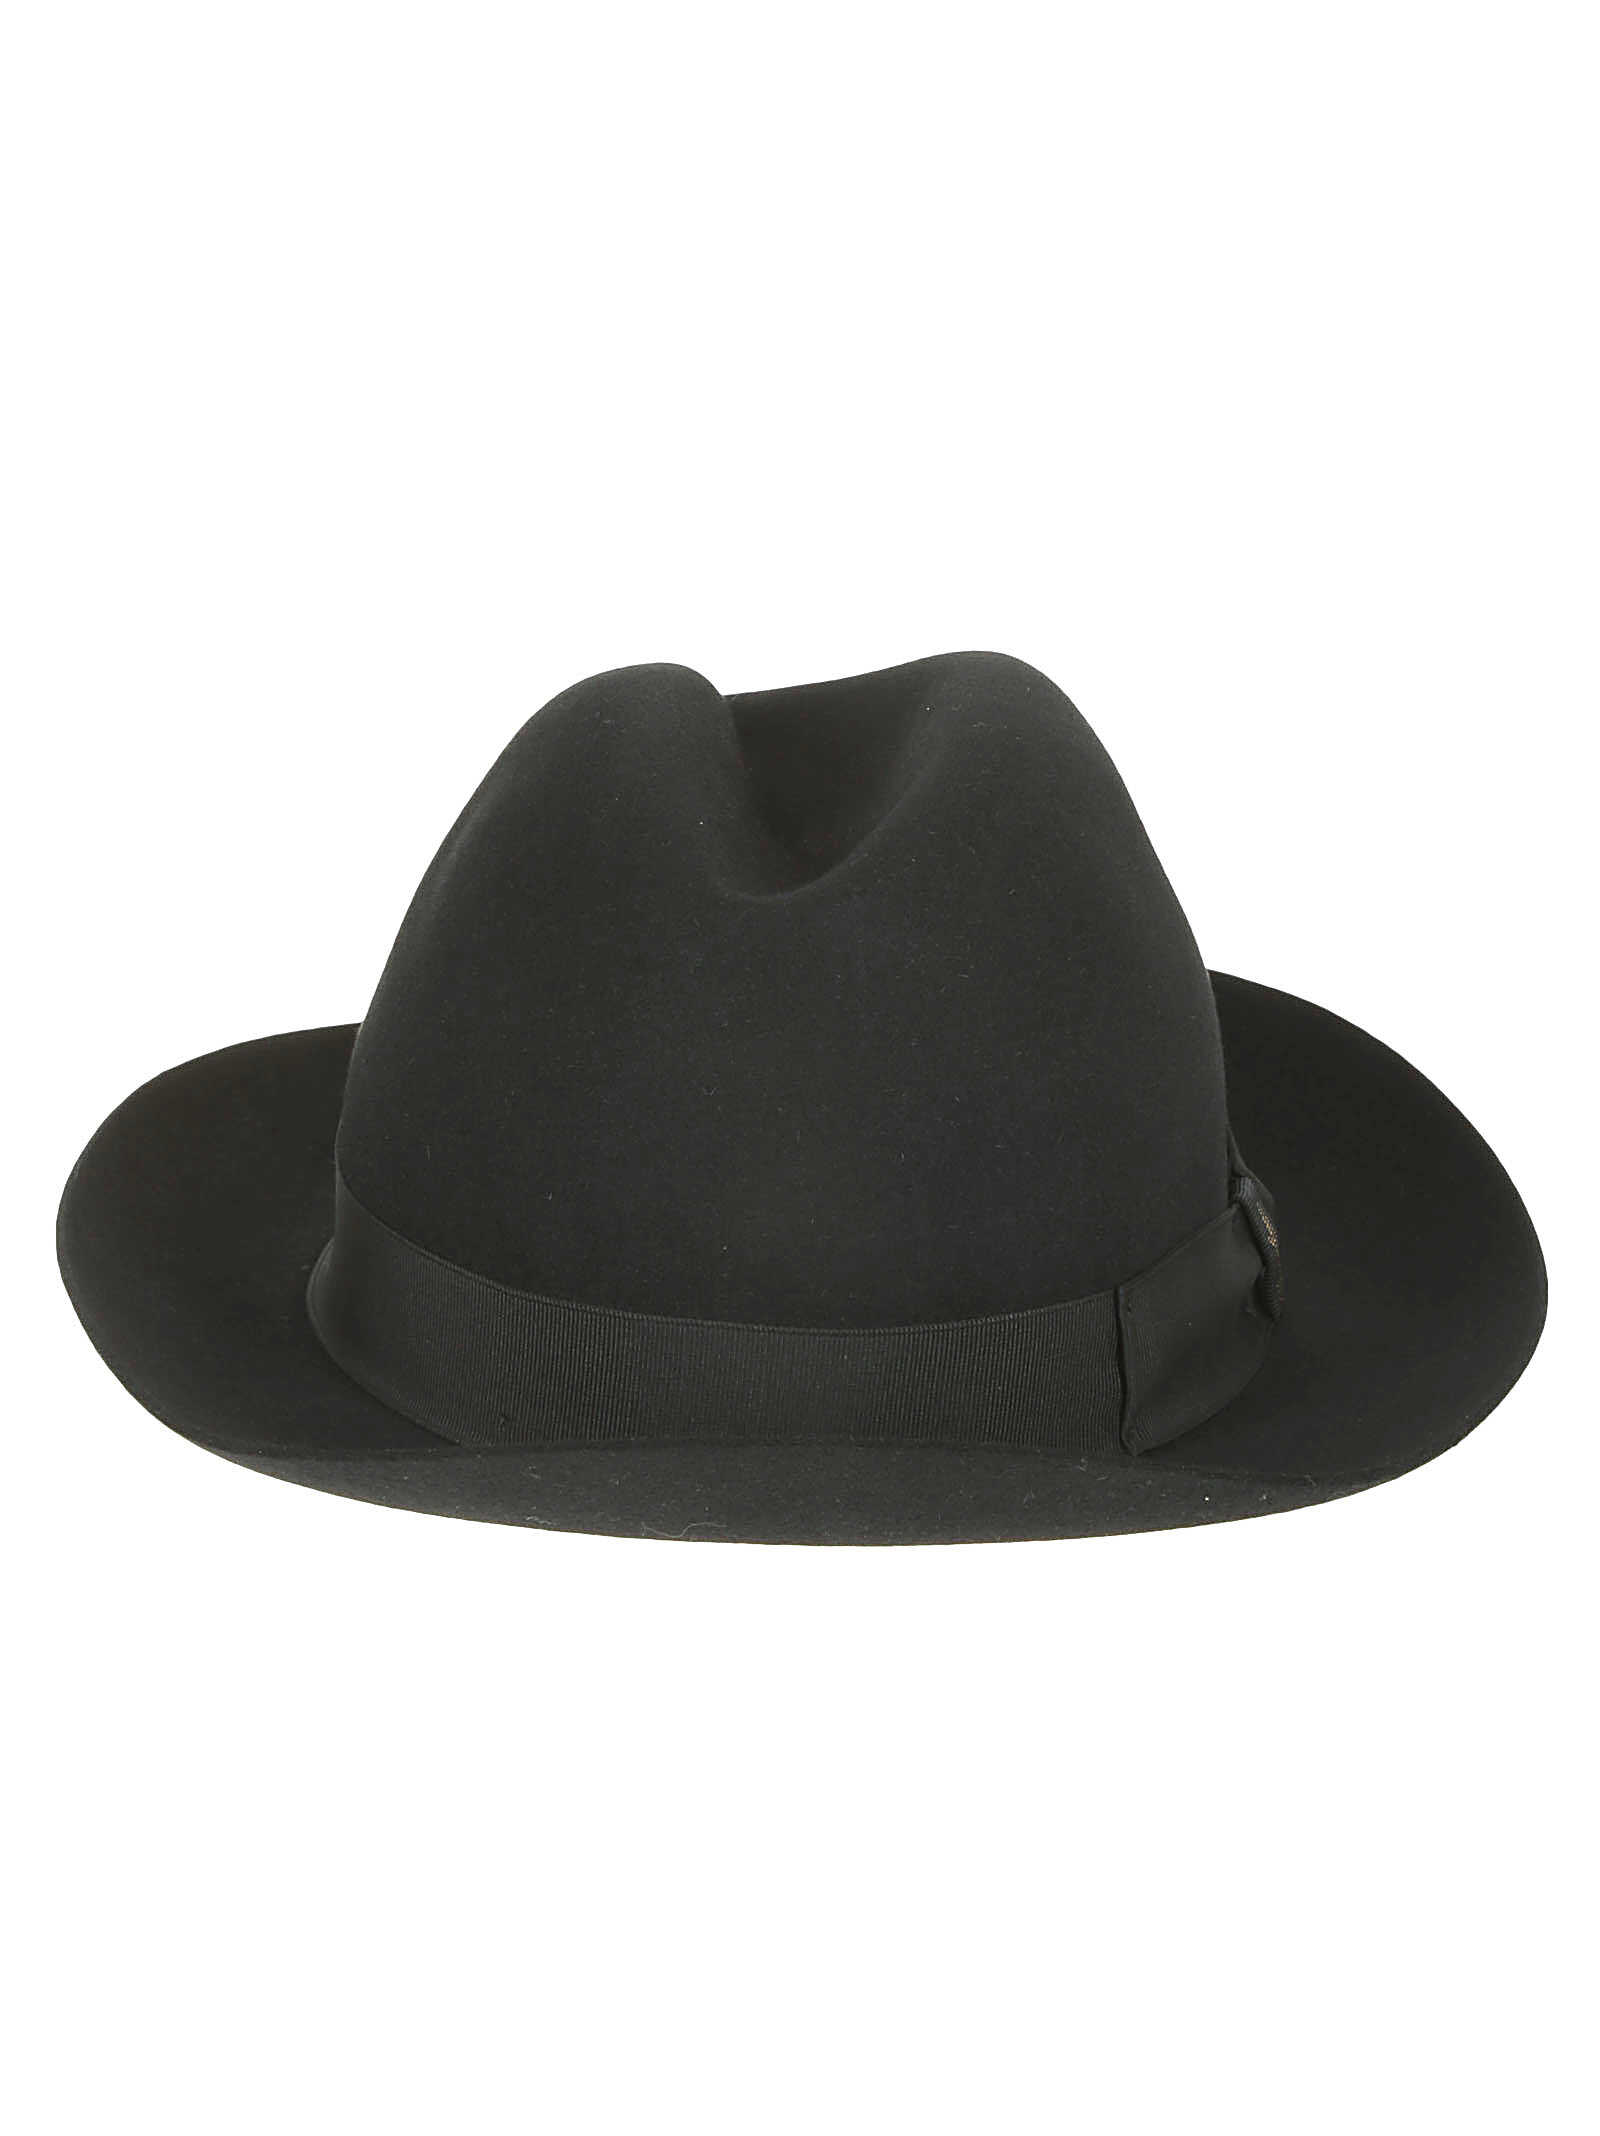 BORSALINO BORSALINO hat 490025 0411 MIRTILLO Black